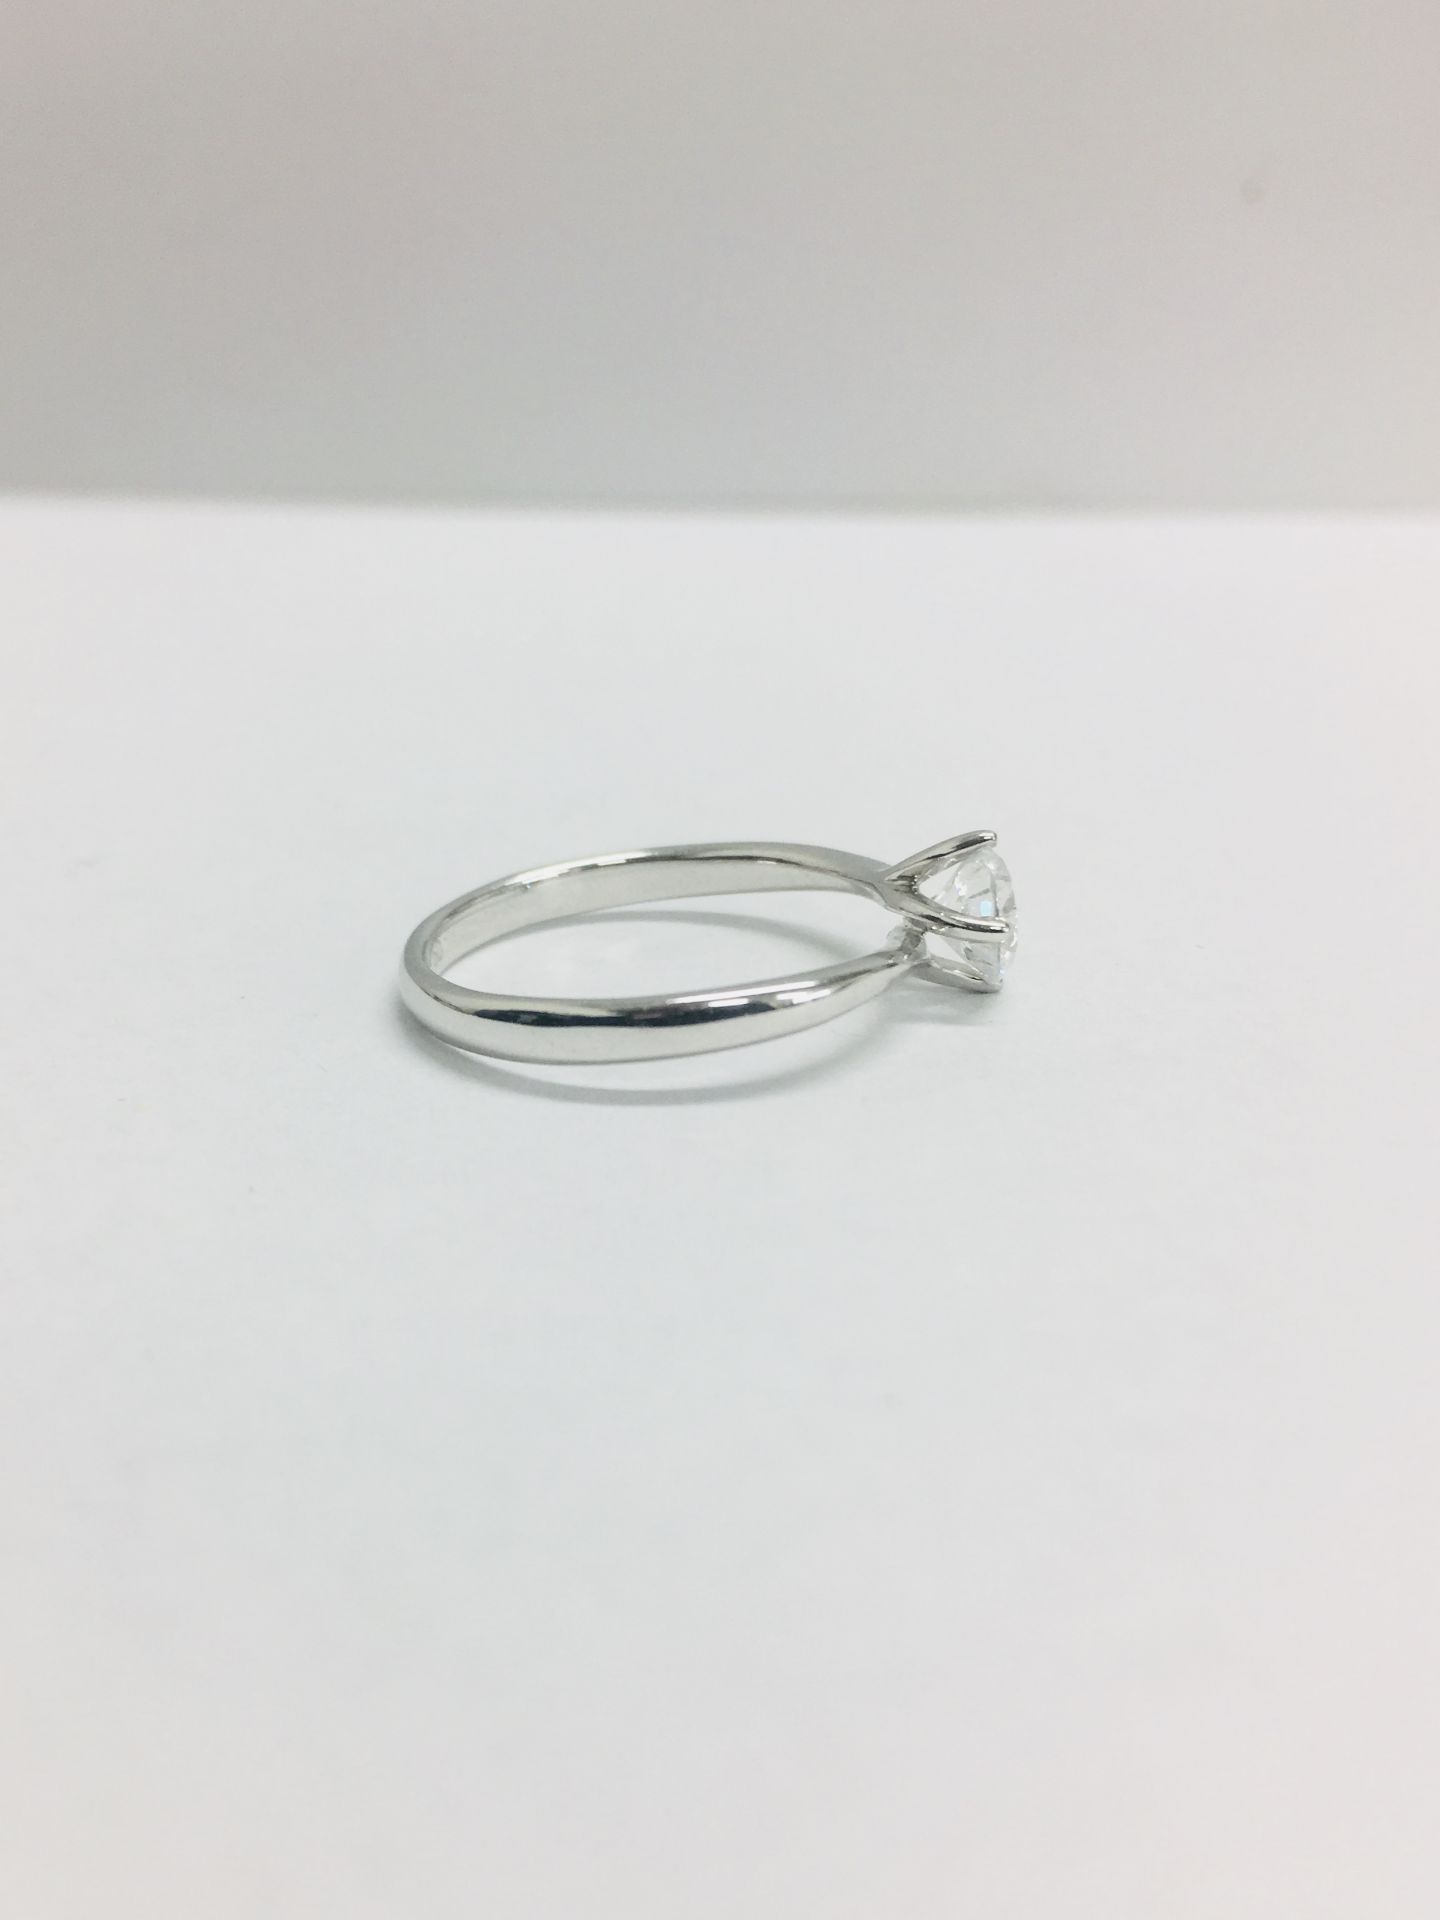 Platinum diamond twist style solitaire ring,0.50ct diamond D colour vs clarity,3.28gms platinum - Image 4 of 5